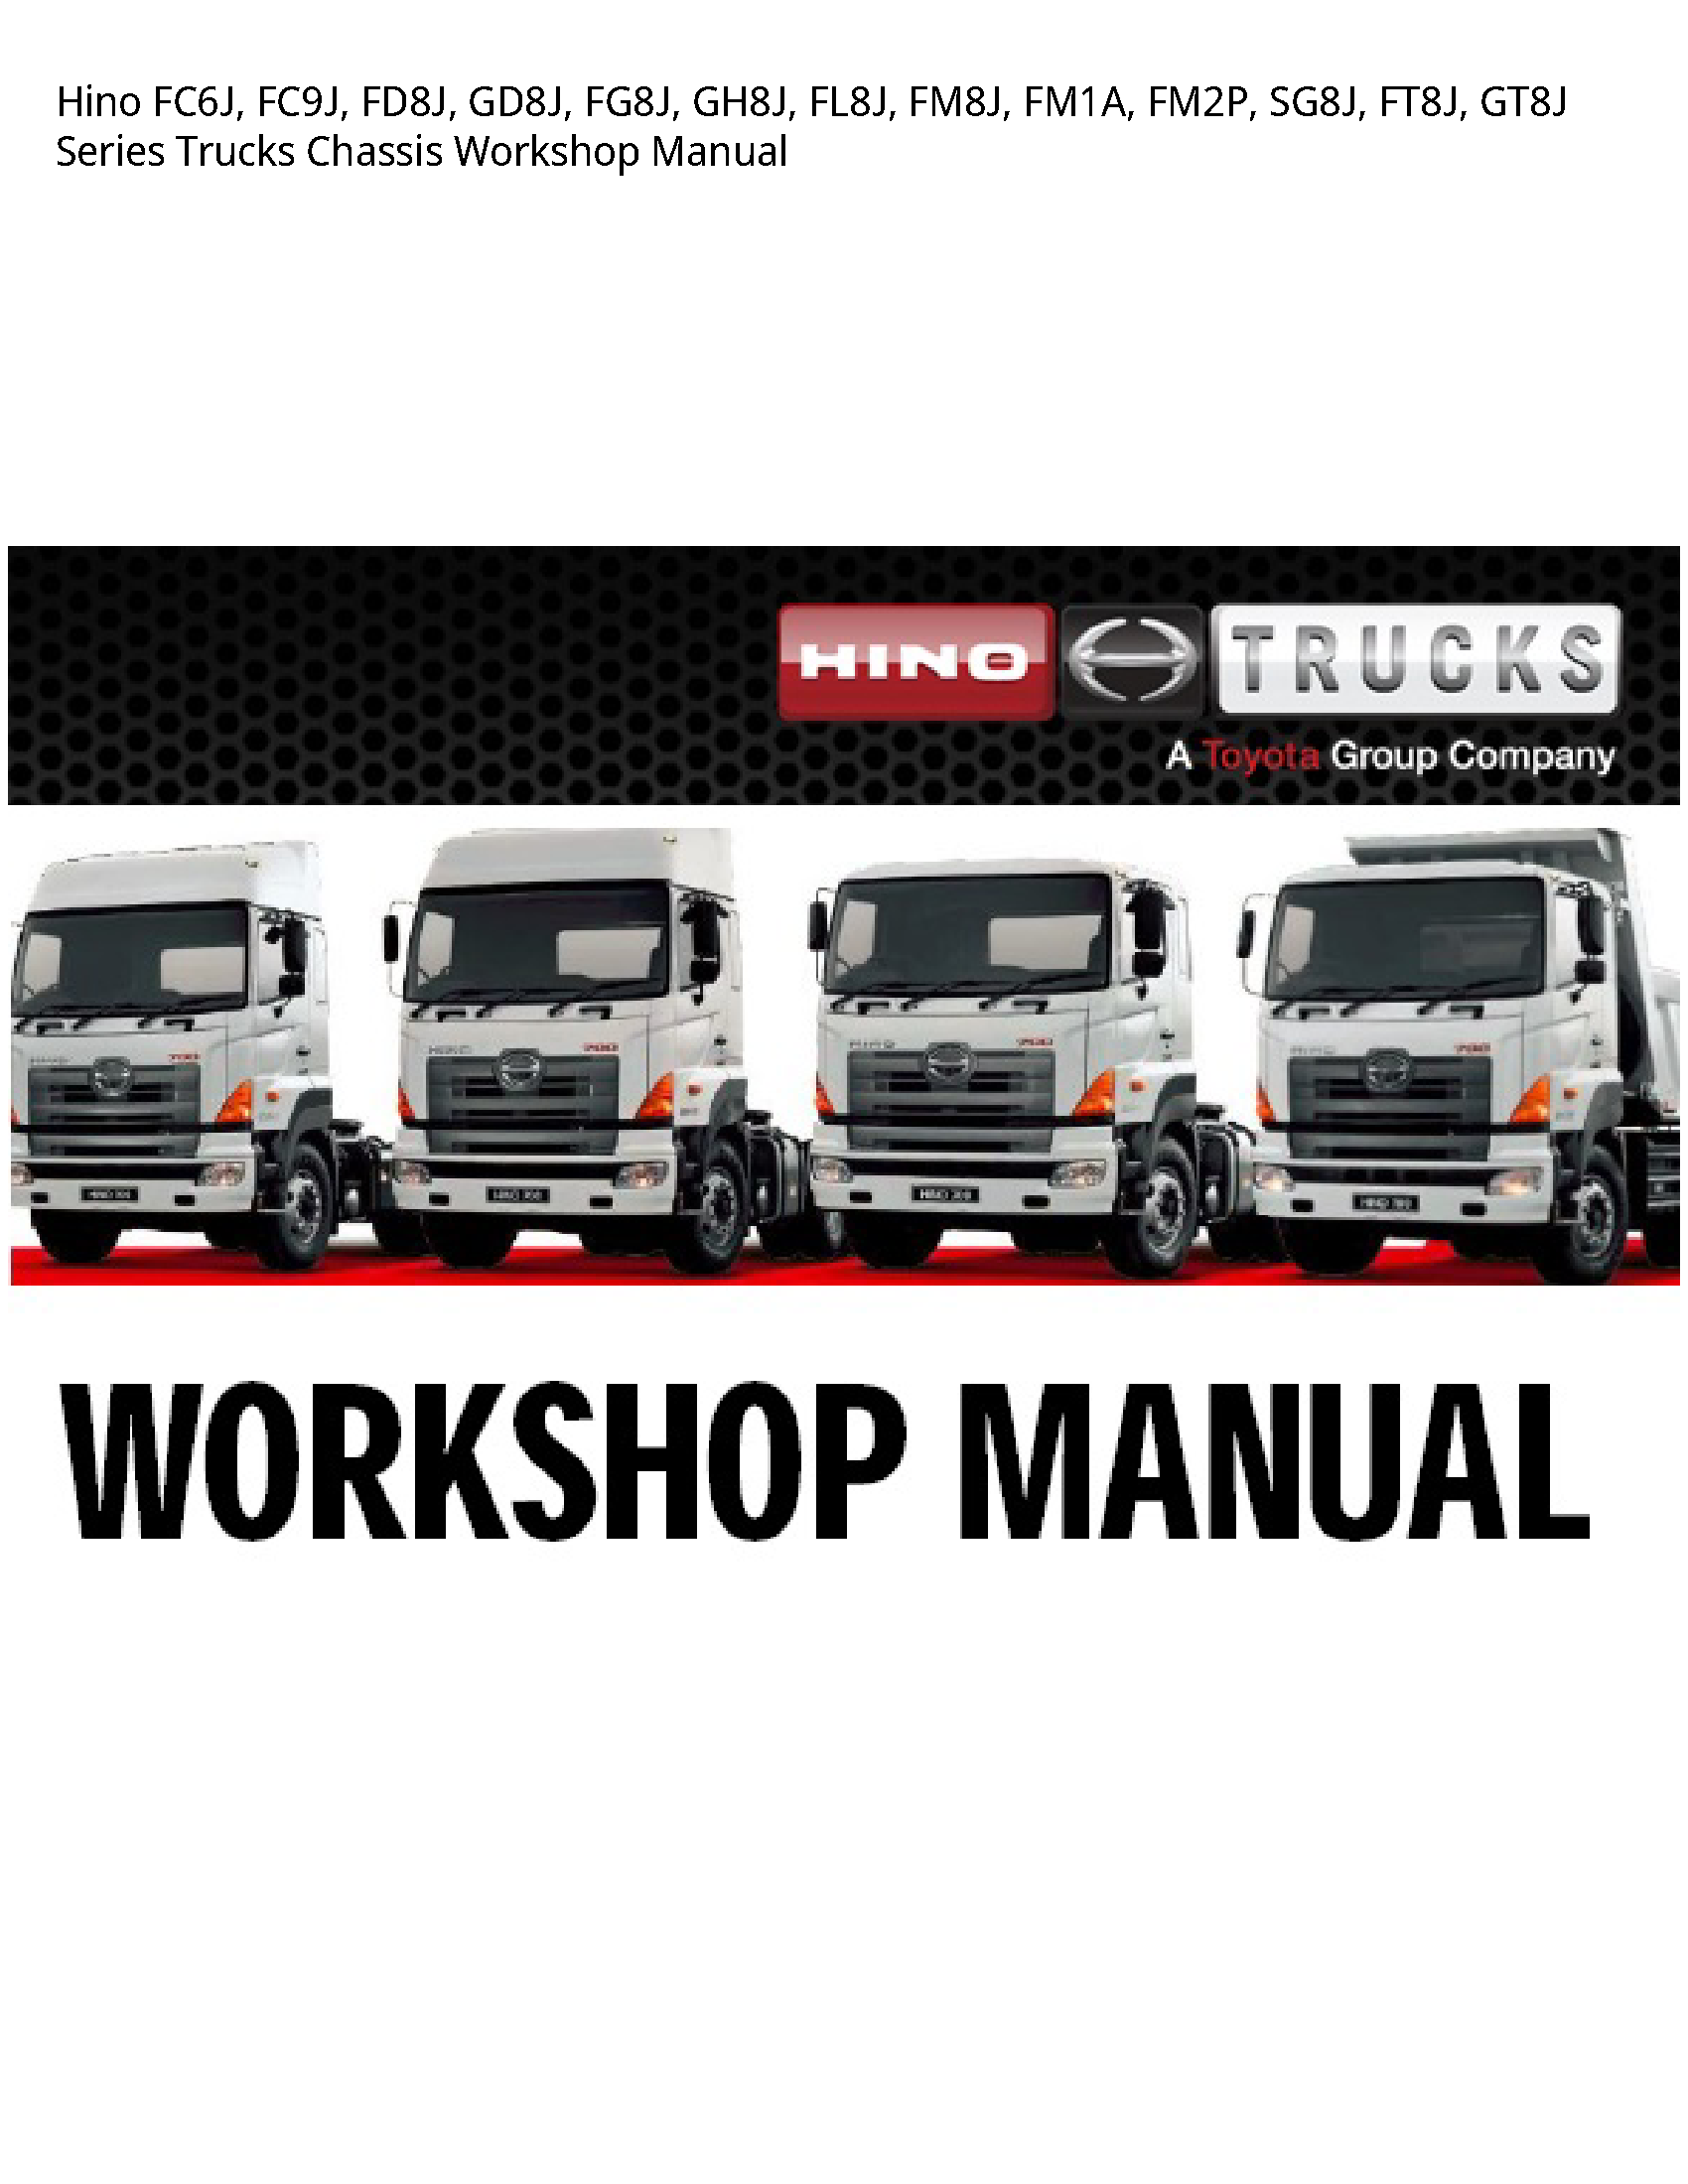 Hino FC6J Series Trucks Chassis manual